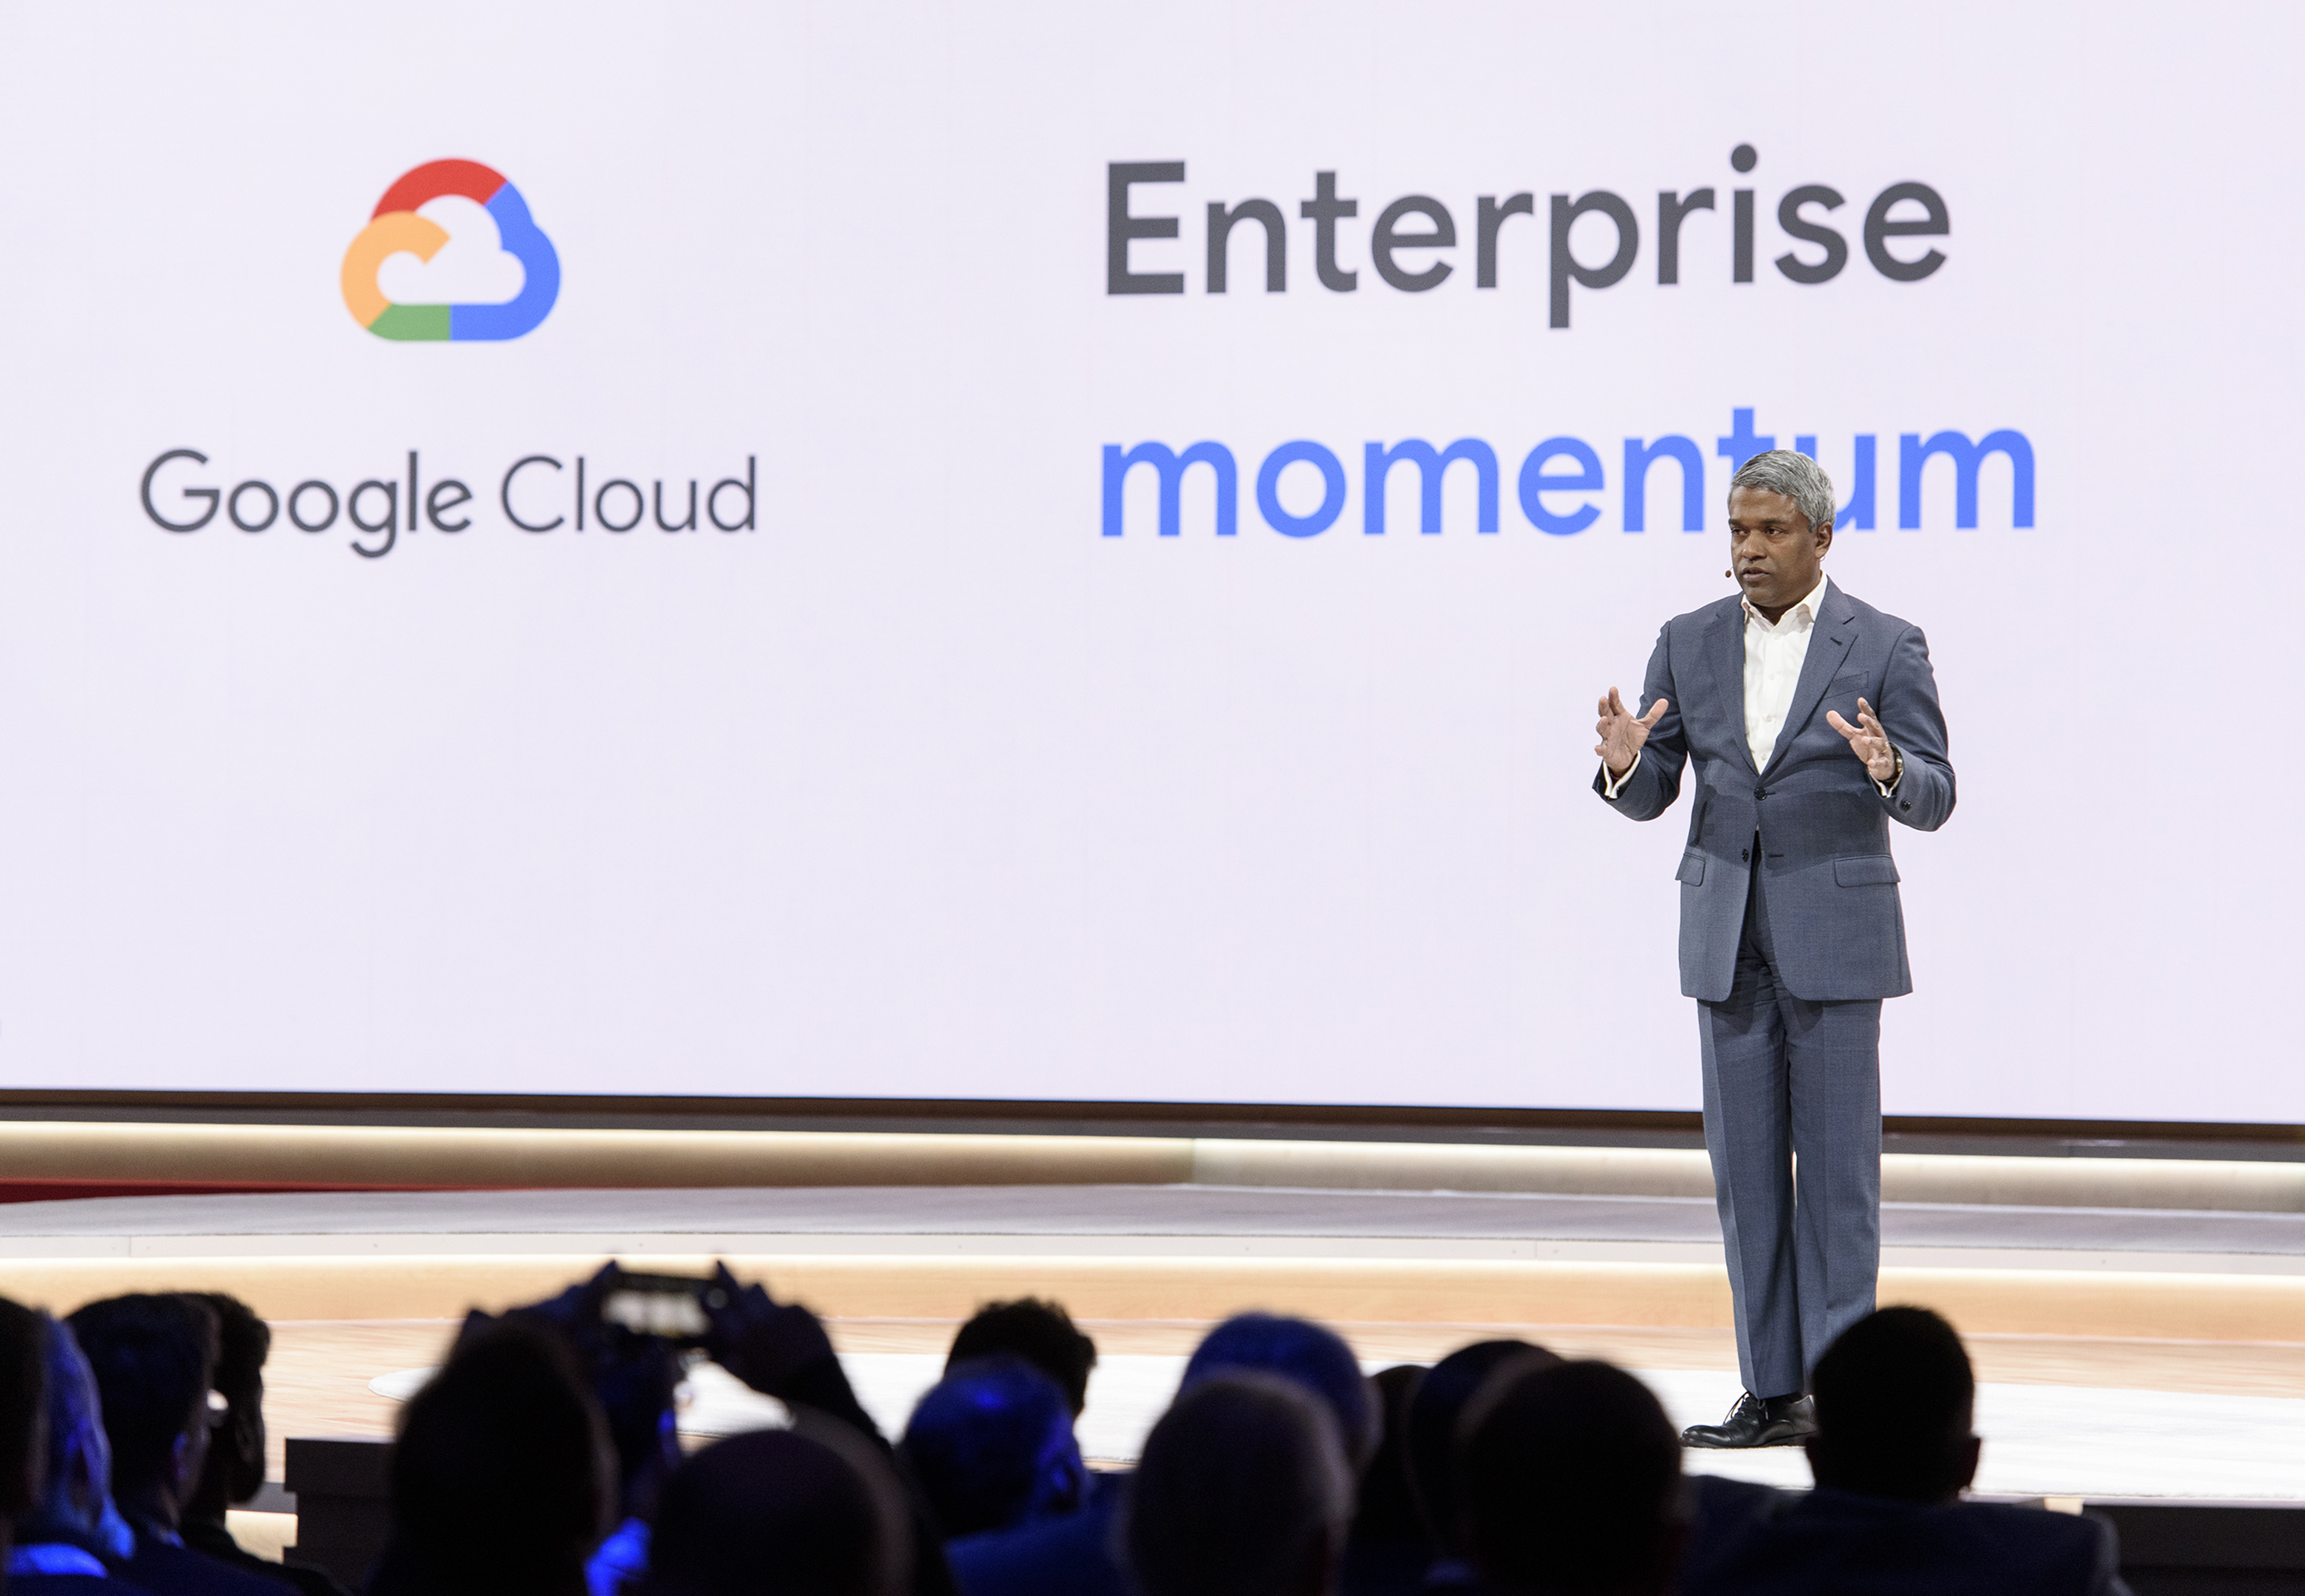 Thomas Kurian on his first year as Google Cloud CEO